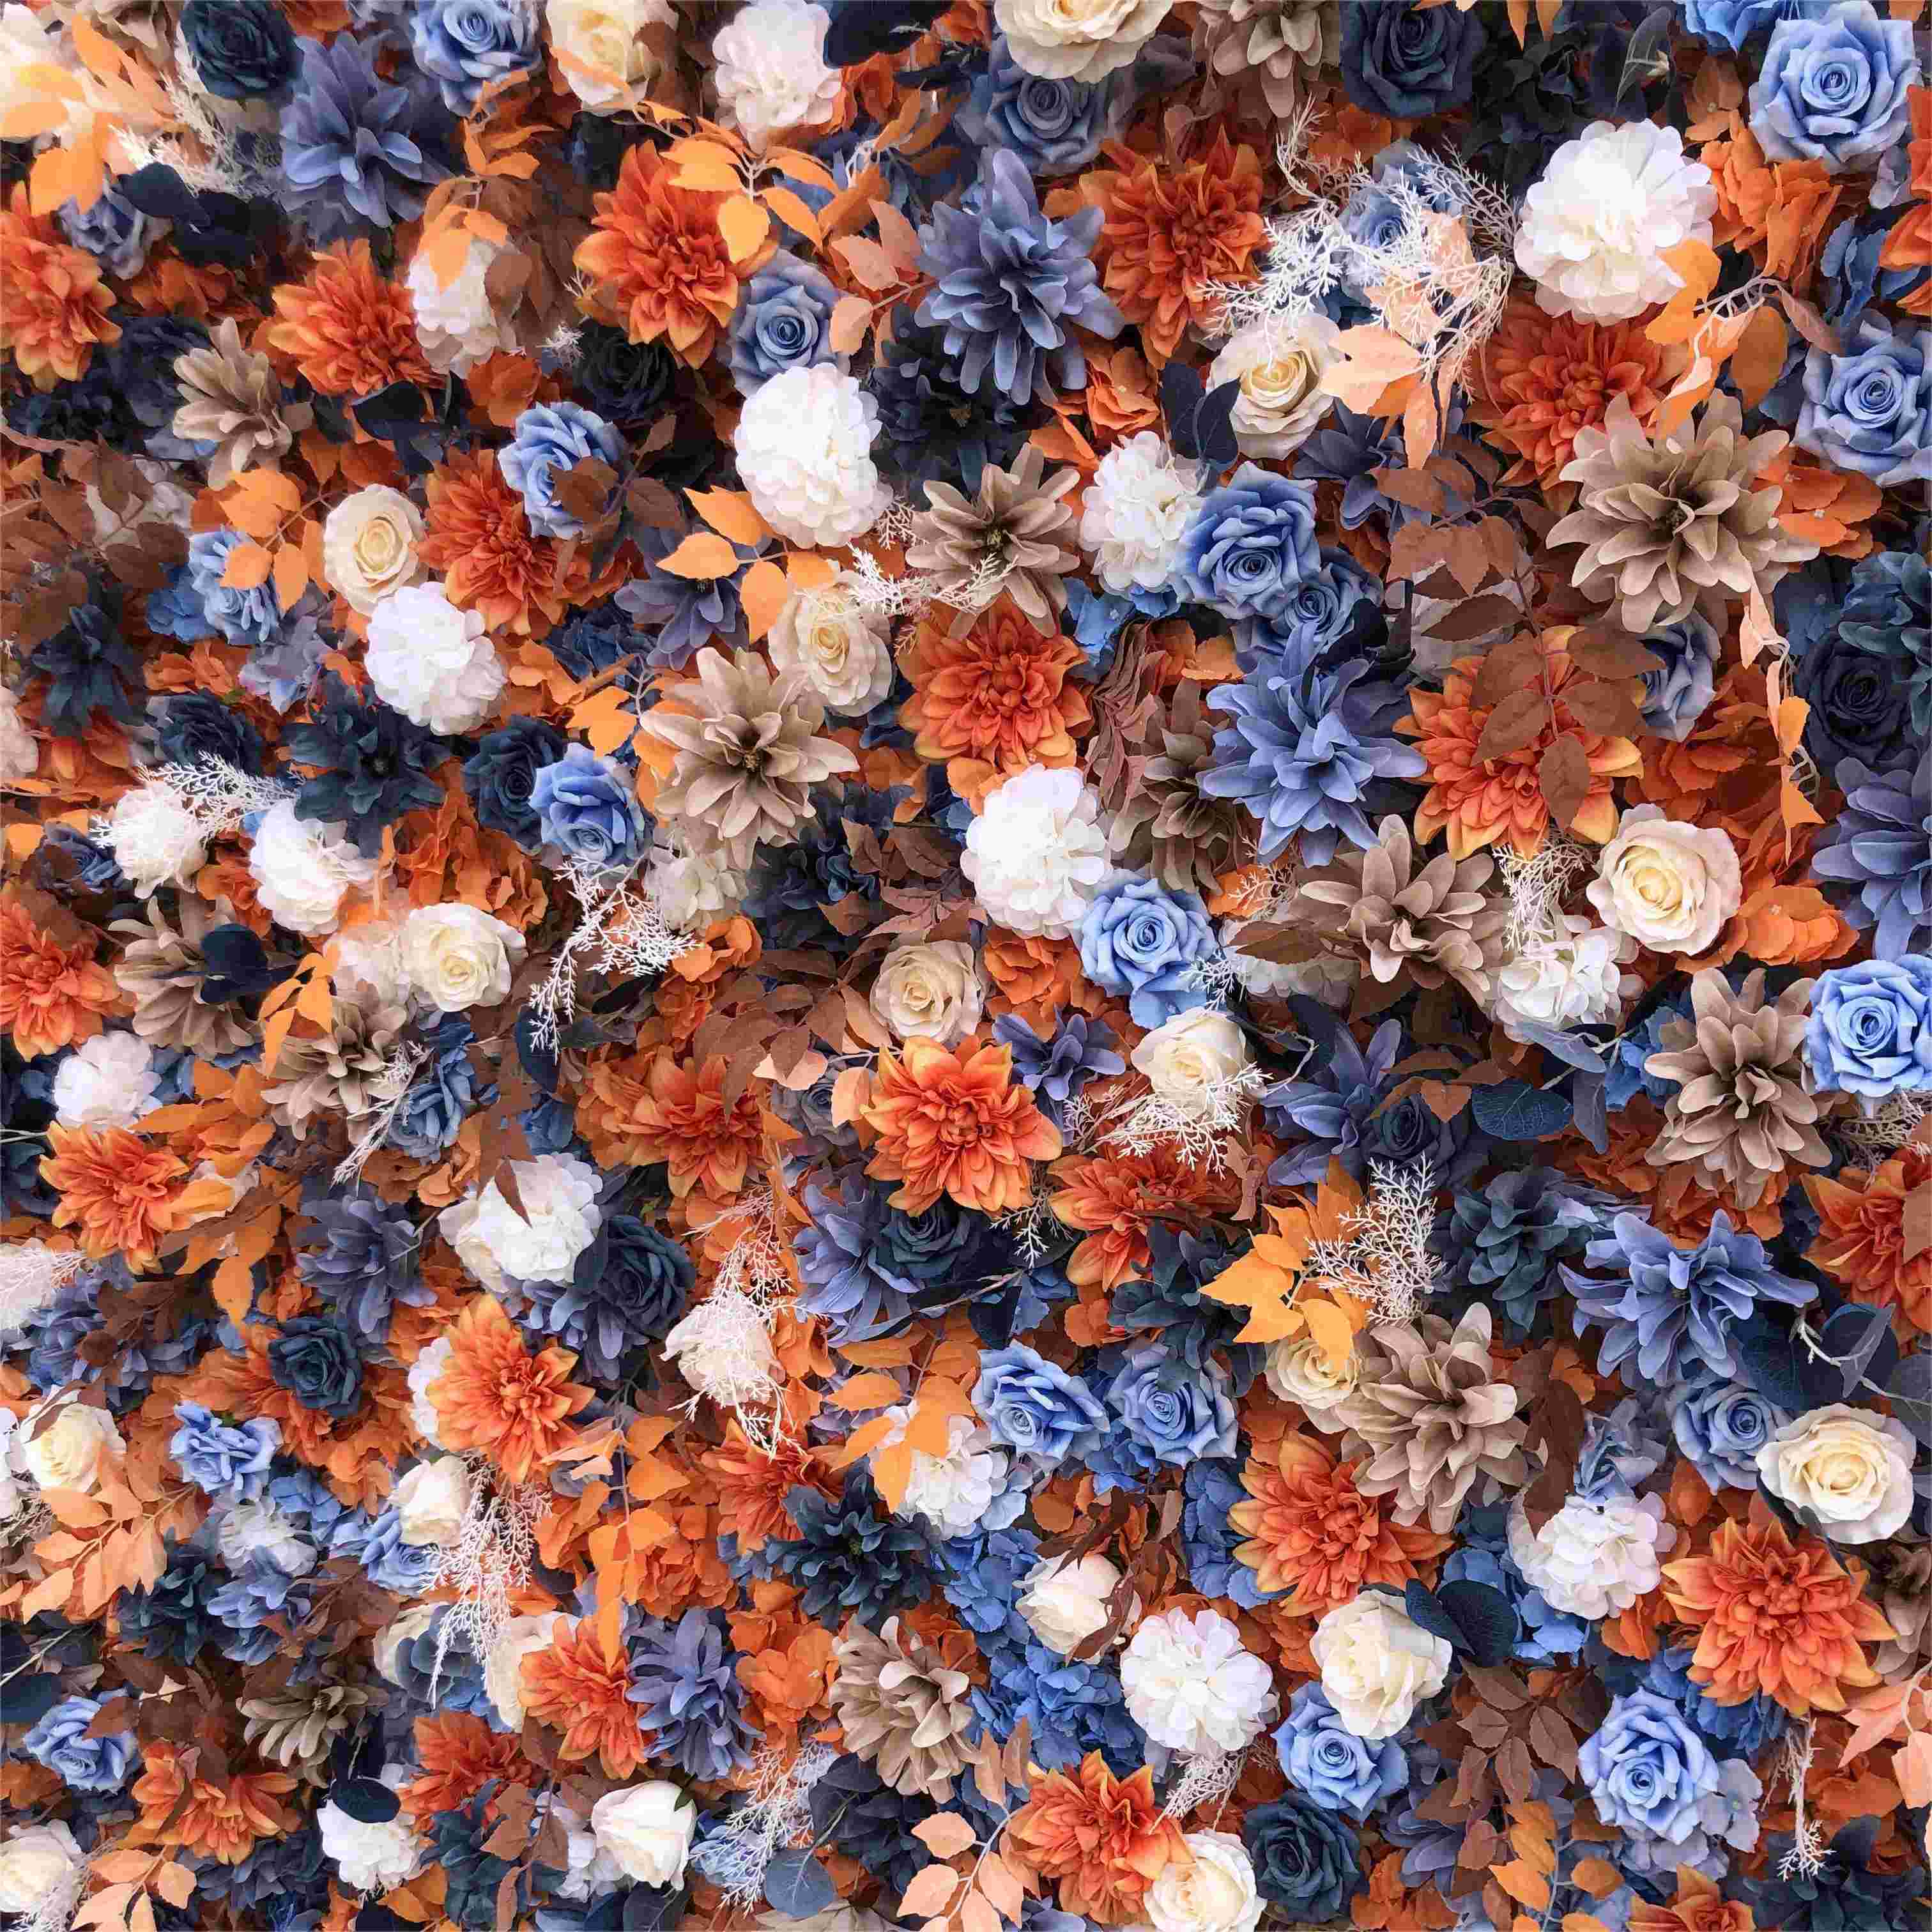 The fall retro orange blue flower wall looks bright and distinctive.